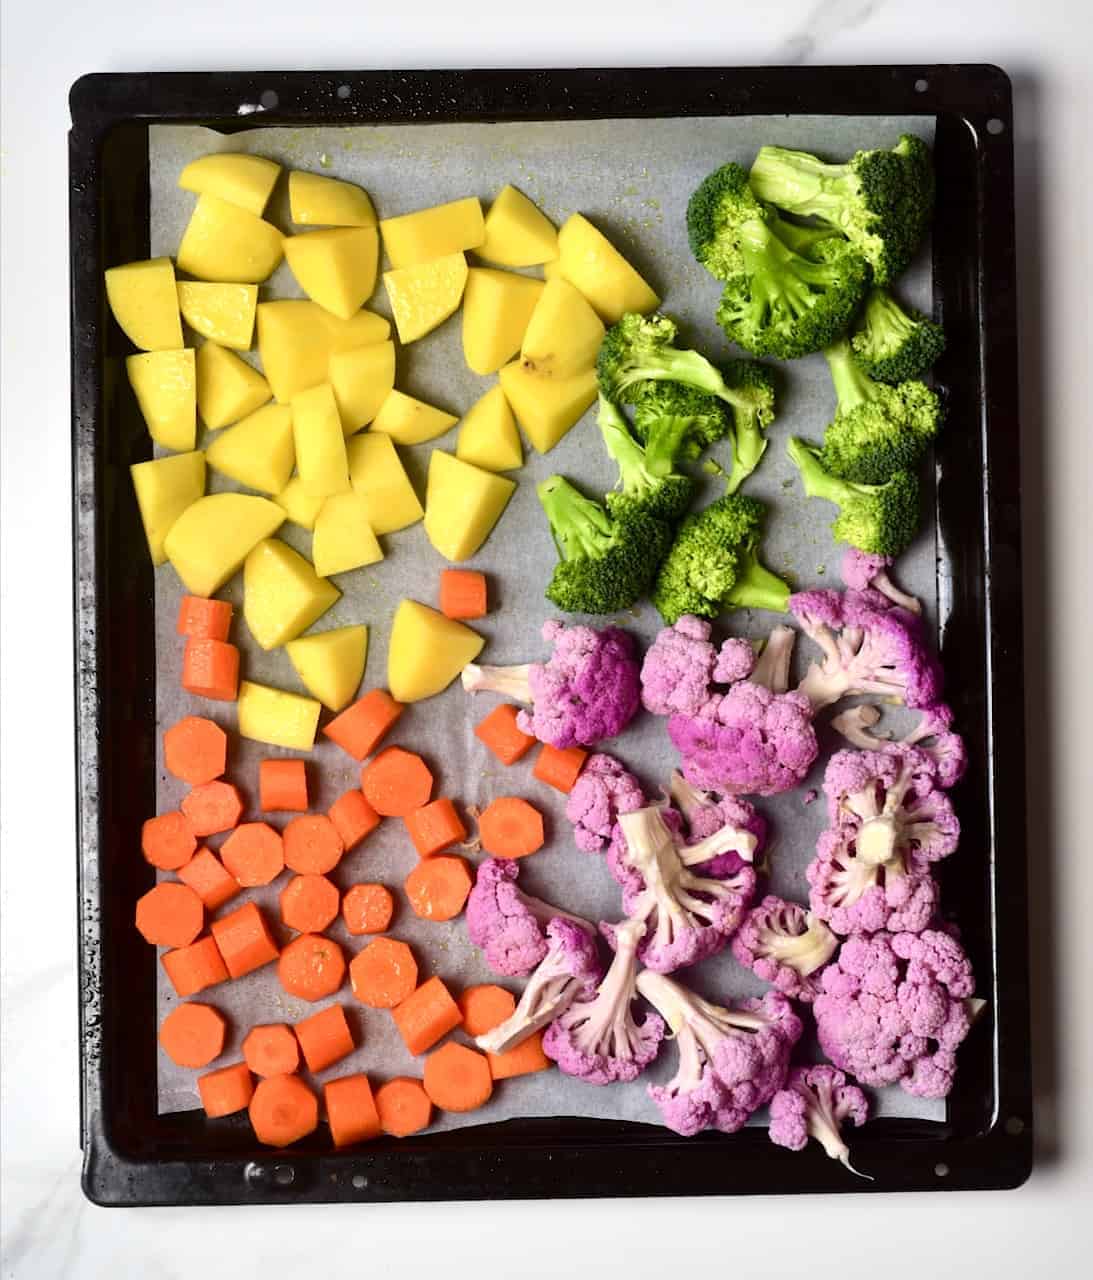 rainbow vegetables for roasting